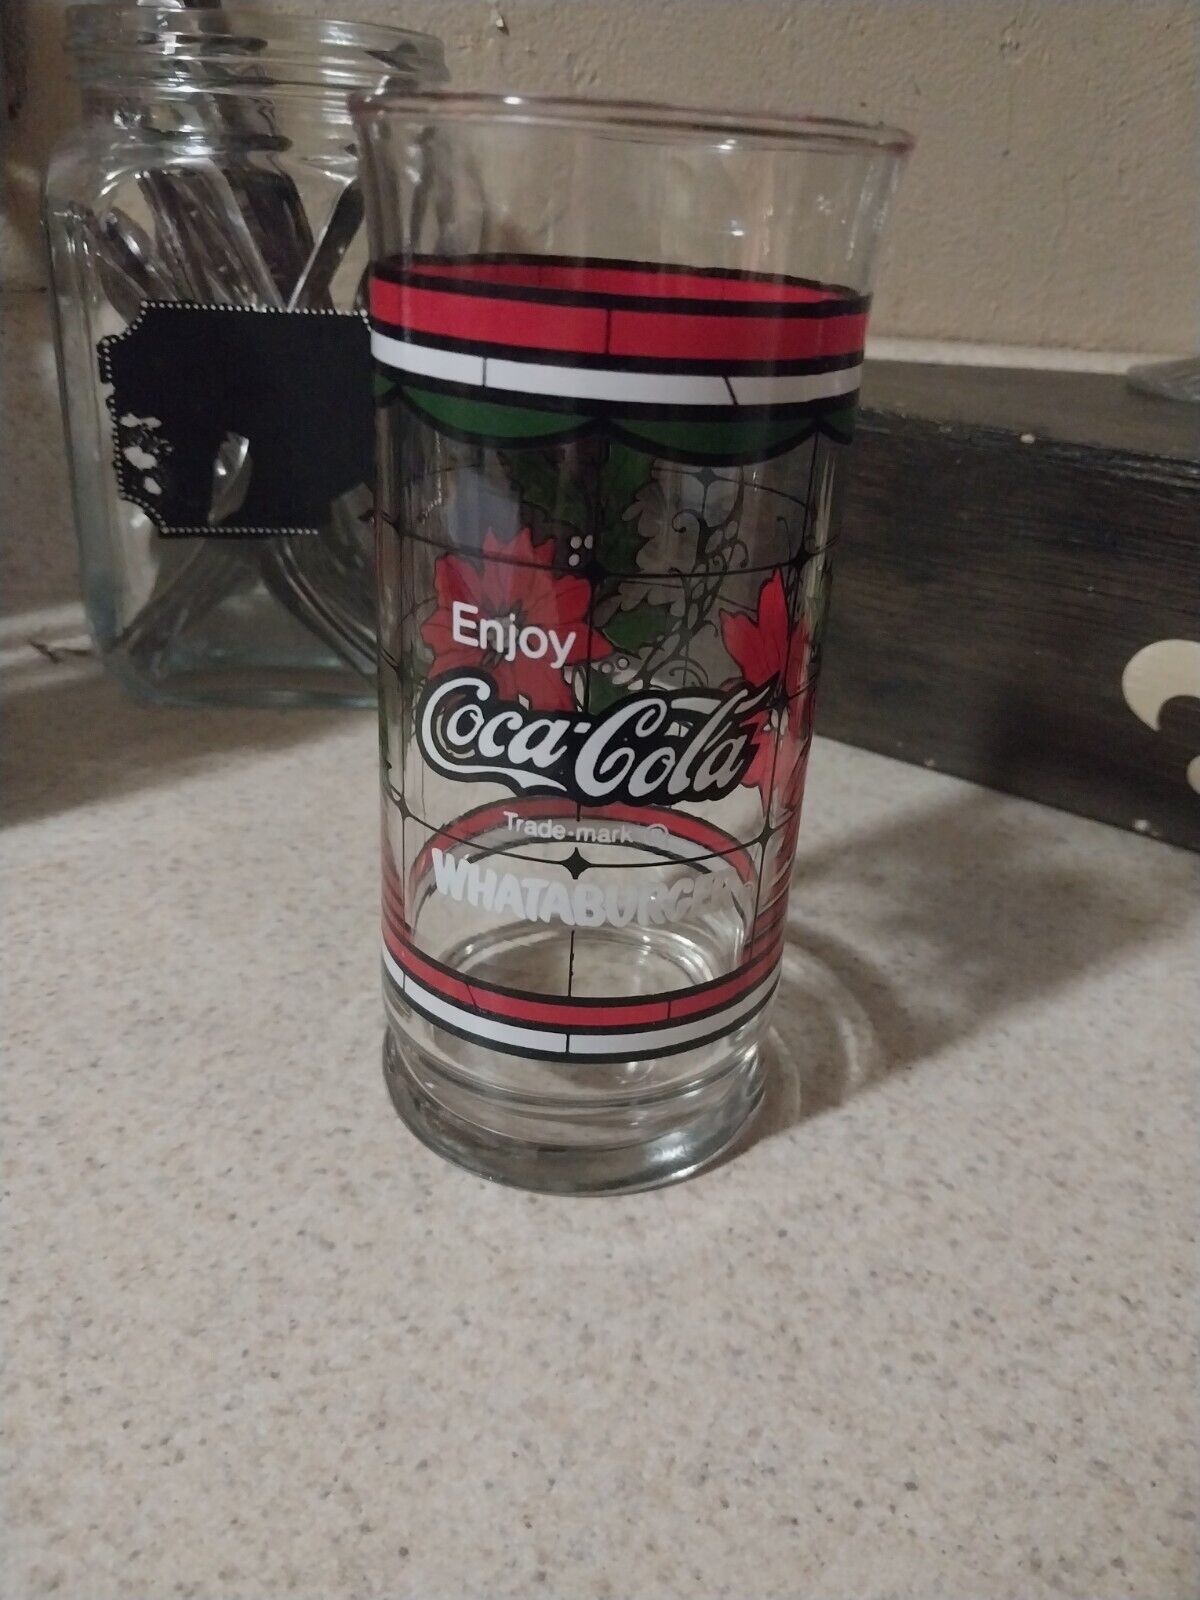  8 Coca-Cola Whataburger Poinsettia Christmas Glass, 6 Inches, Coke Collectible